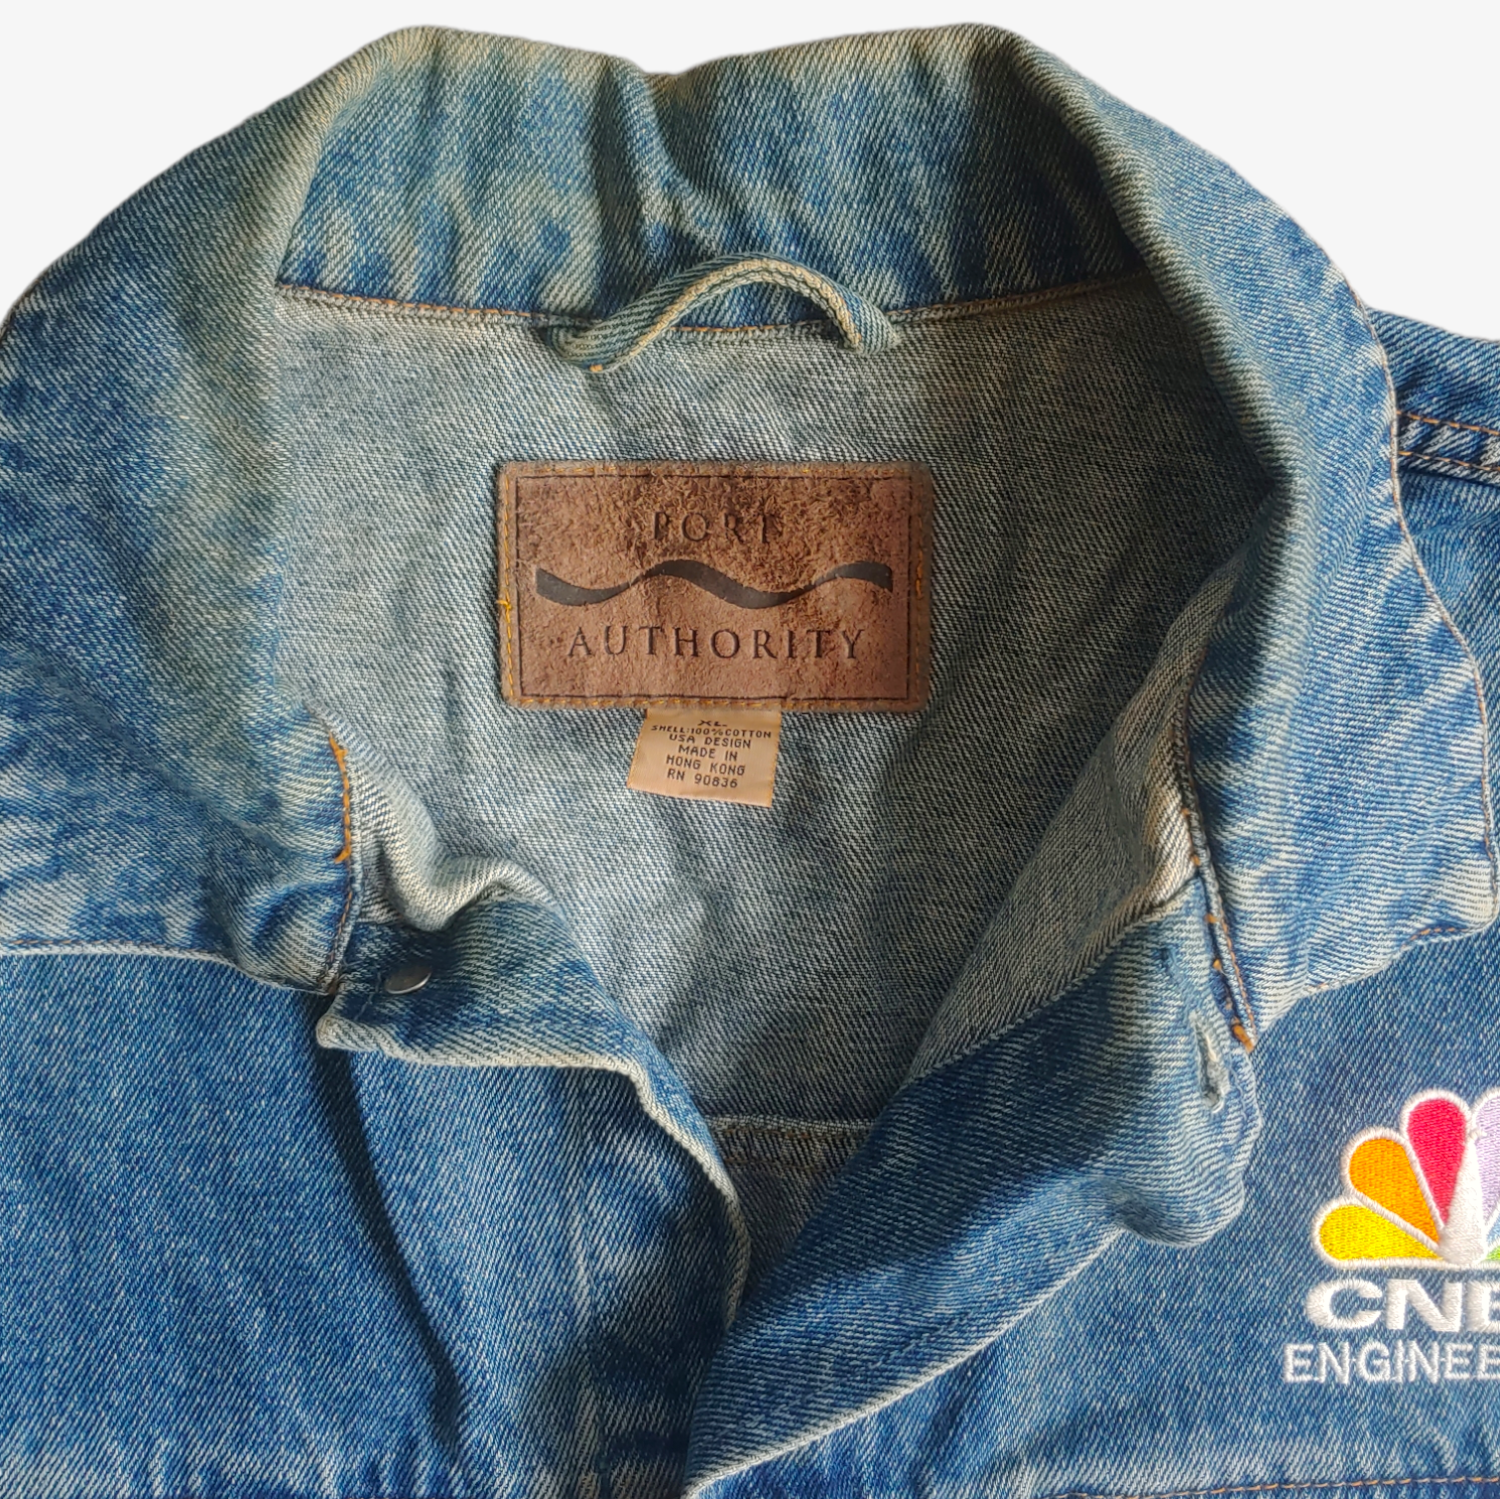 Vintage 90s CNBC Engineering Promotional Denim Jacket Label - Casspios Dream